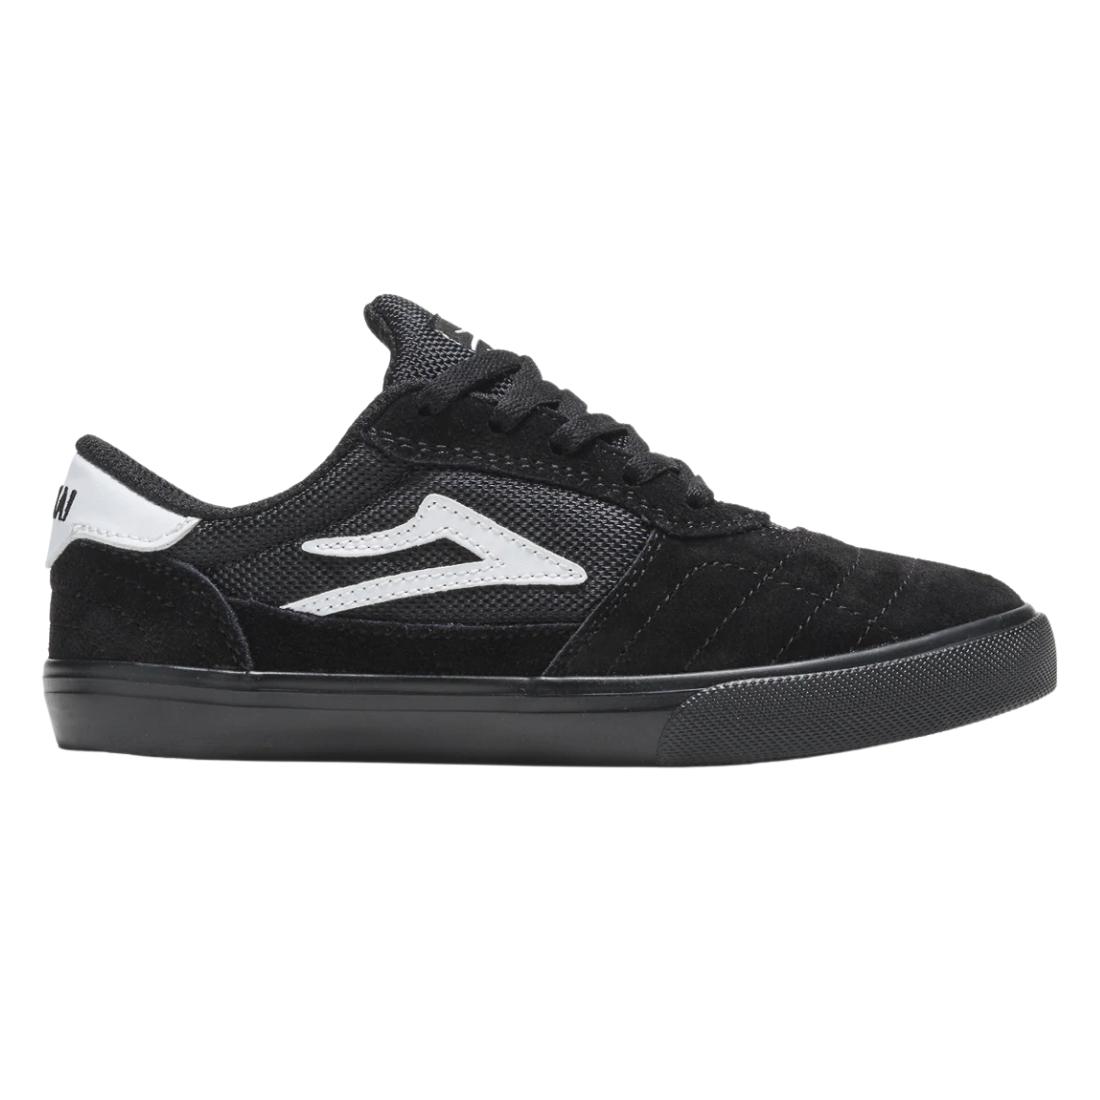 Lakai Cambridge Kids Skate Shoes - Black Black Suede - Boys Skate Shoes by Lakai